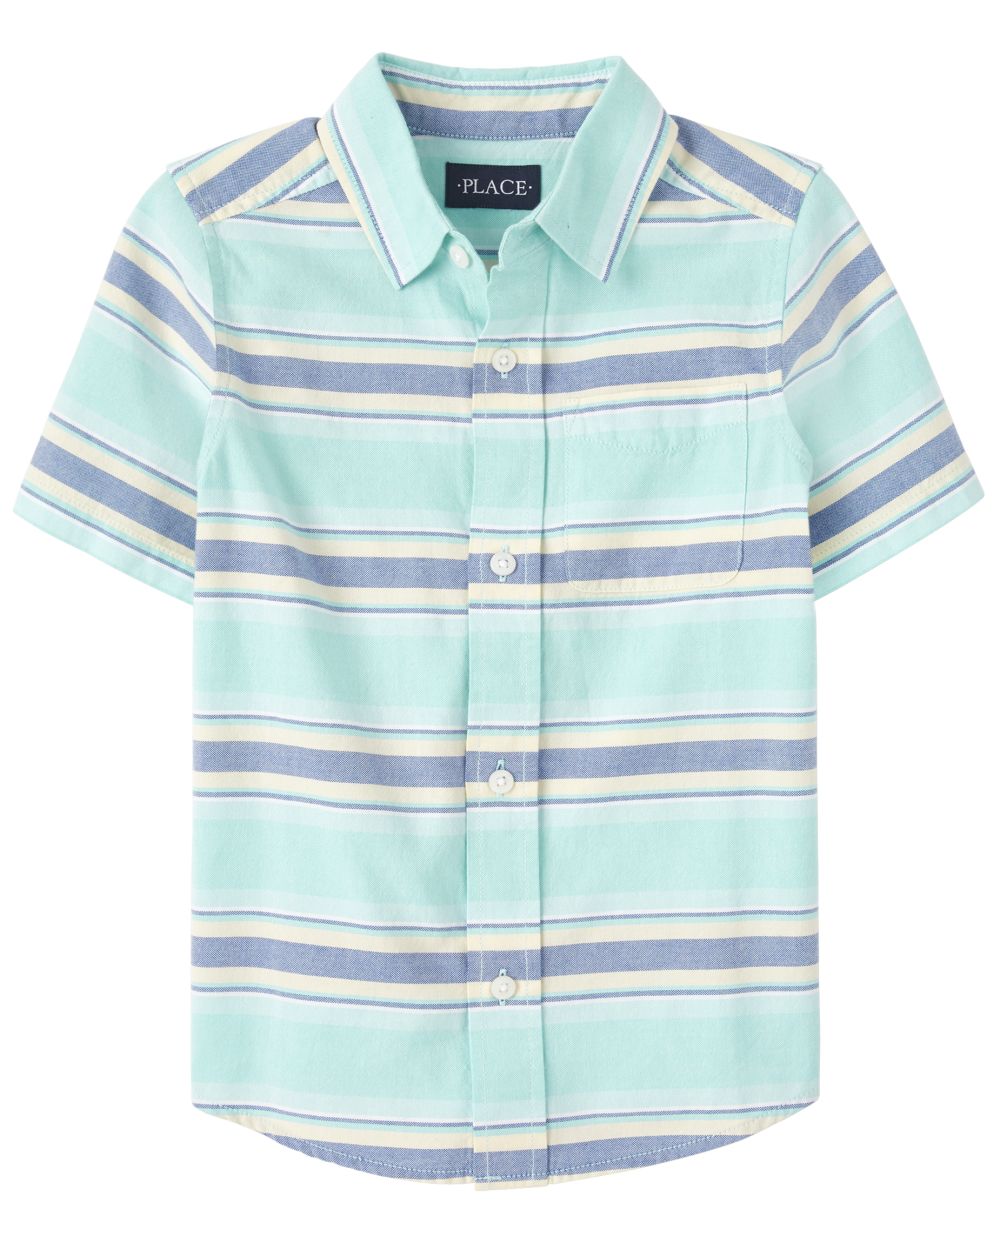 Boys Short Sleeve Striped Oxford Matching Button Down Shirt